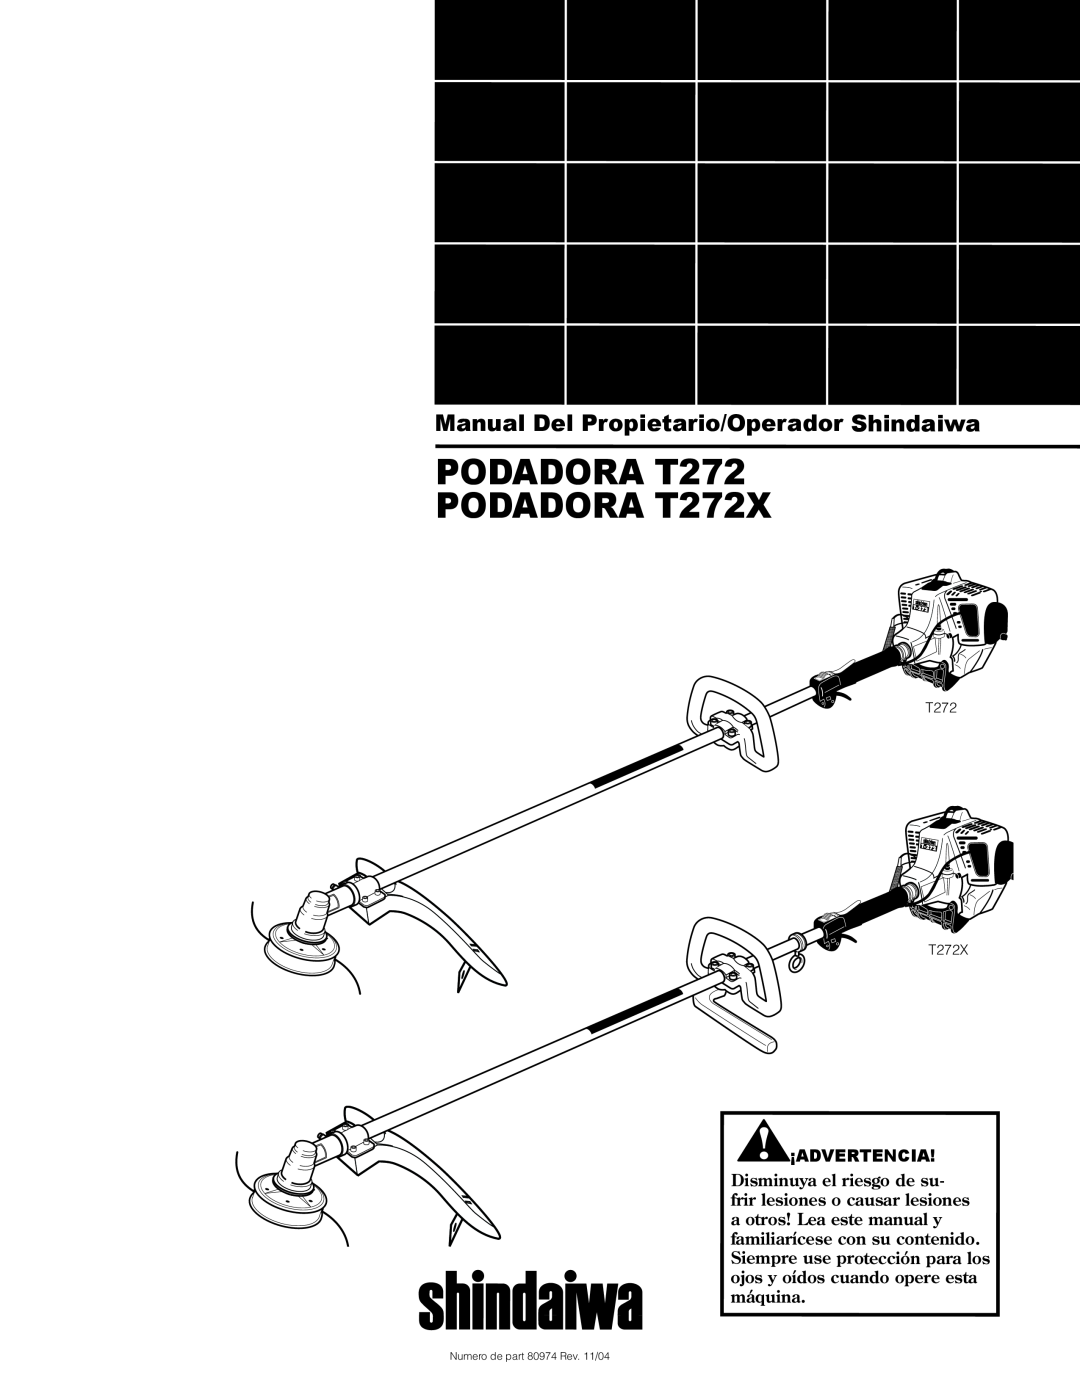 Shindaiwa 80974 manual PODADORA T272 PODADORA T272X, Manual Del Propietario/Operador Shindaiwa, T272 T272X 